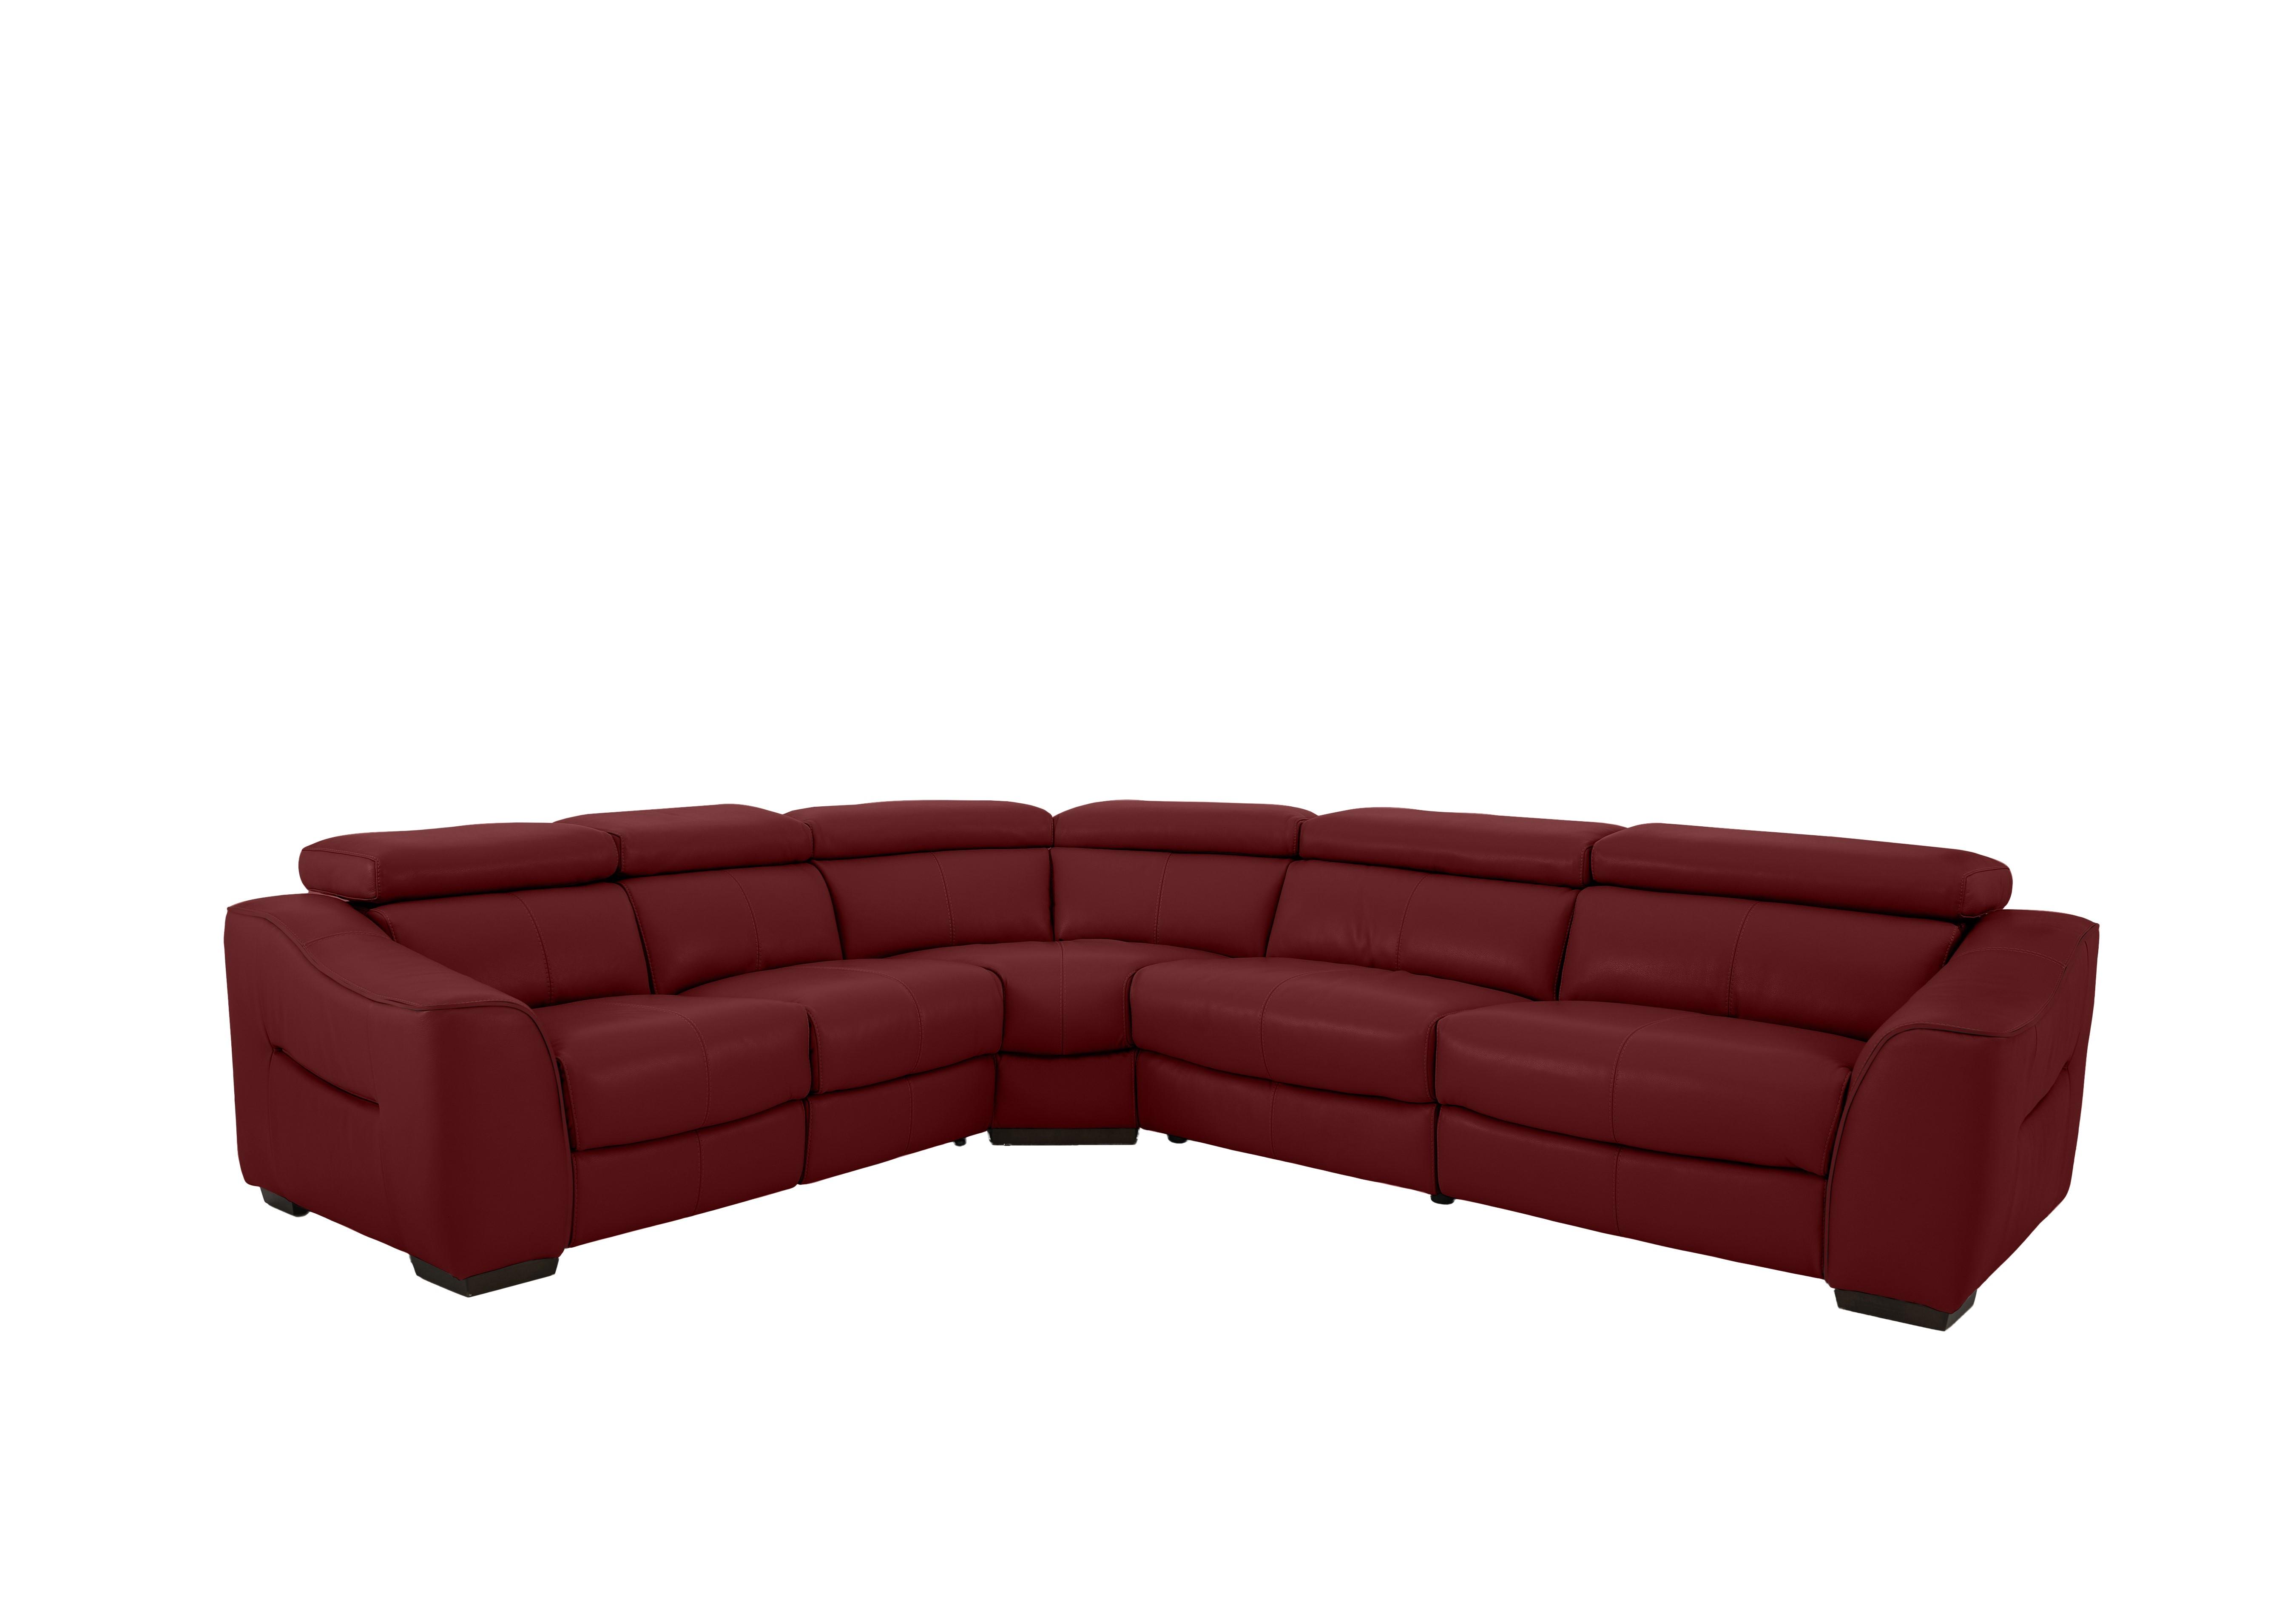 Elixir Leather Power Recliner Corner Sofa in Bv-035c Deep Red on Furniture Village